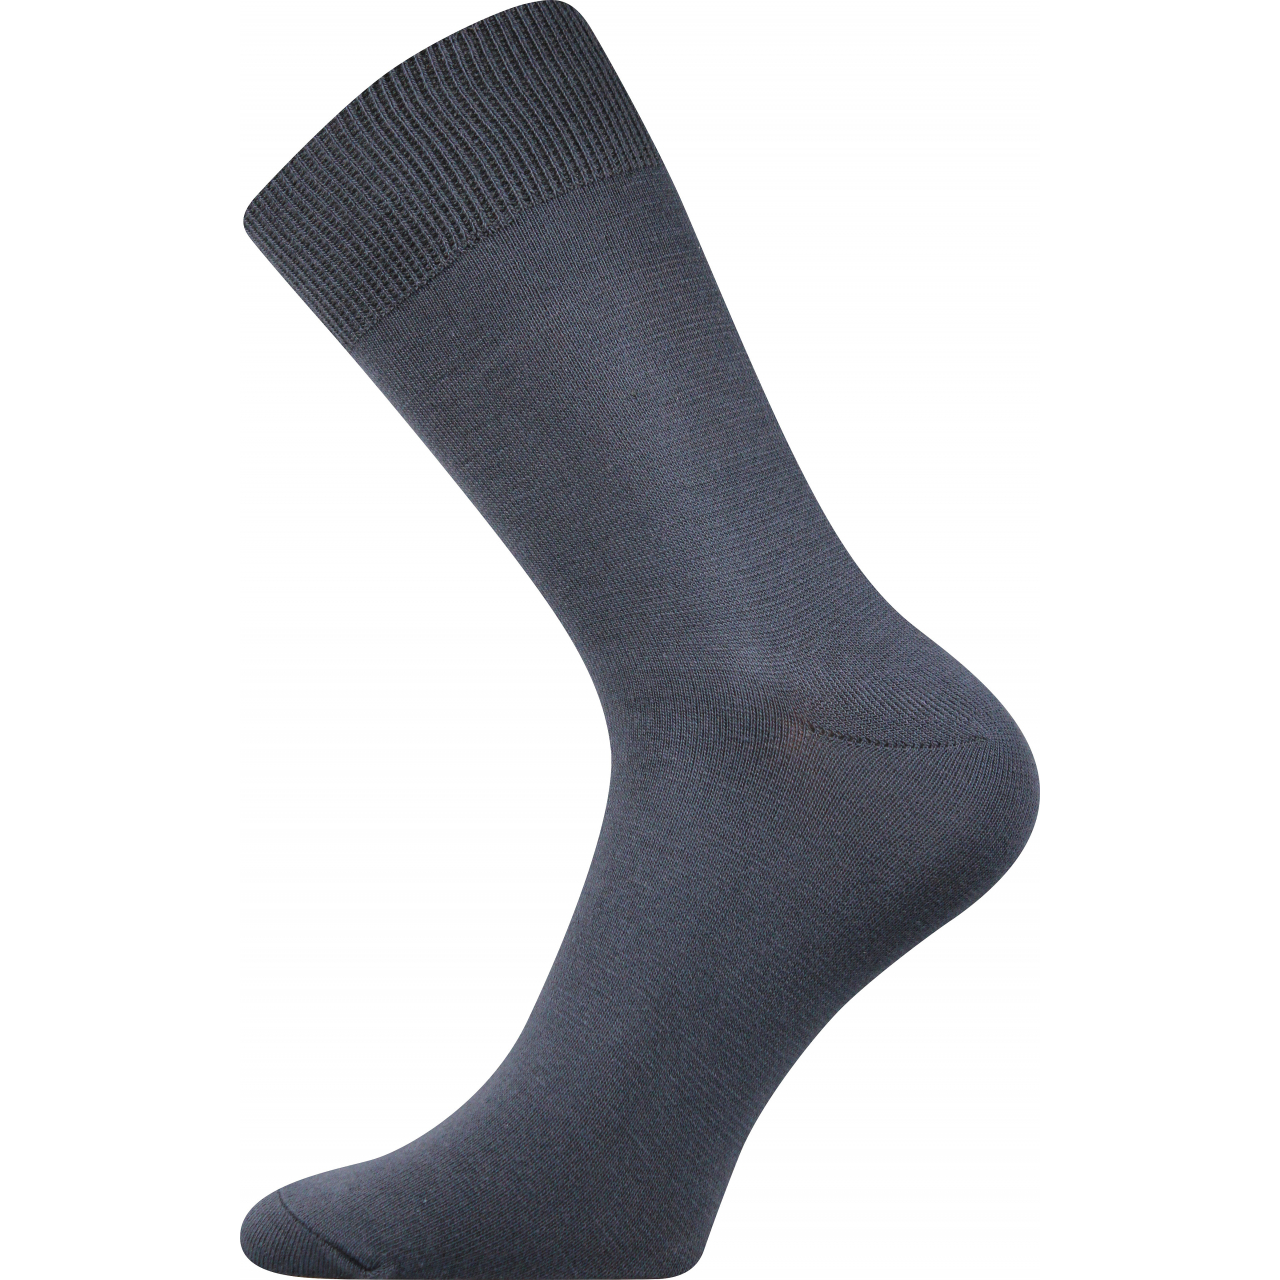 Ponožky unisex klasické Boma Radovan-a - tmavě šedé, 43-46